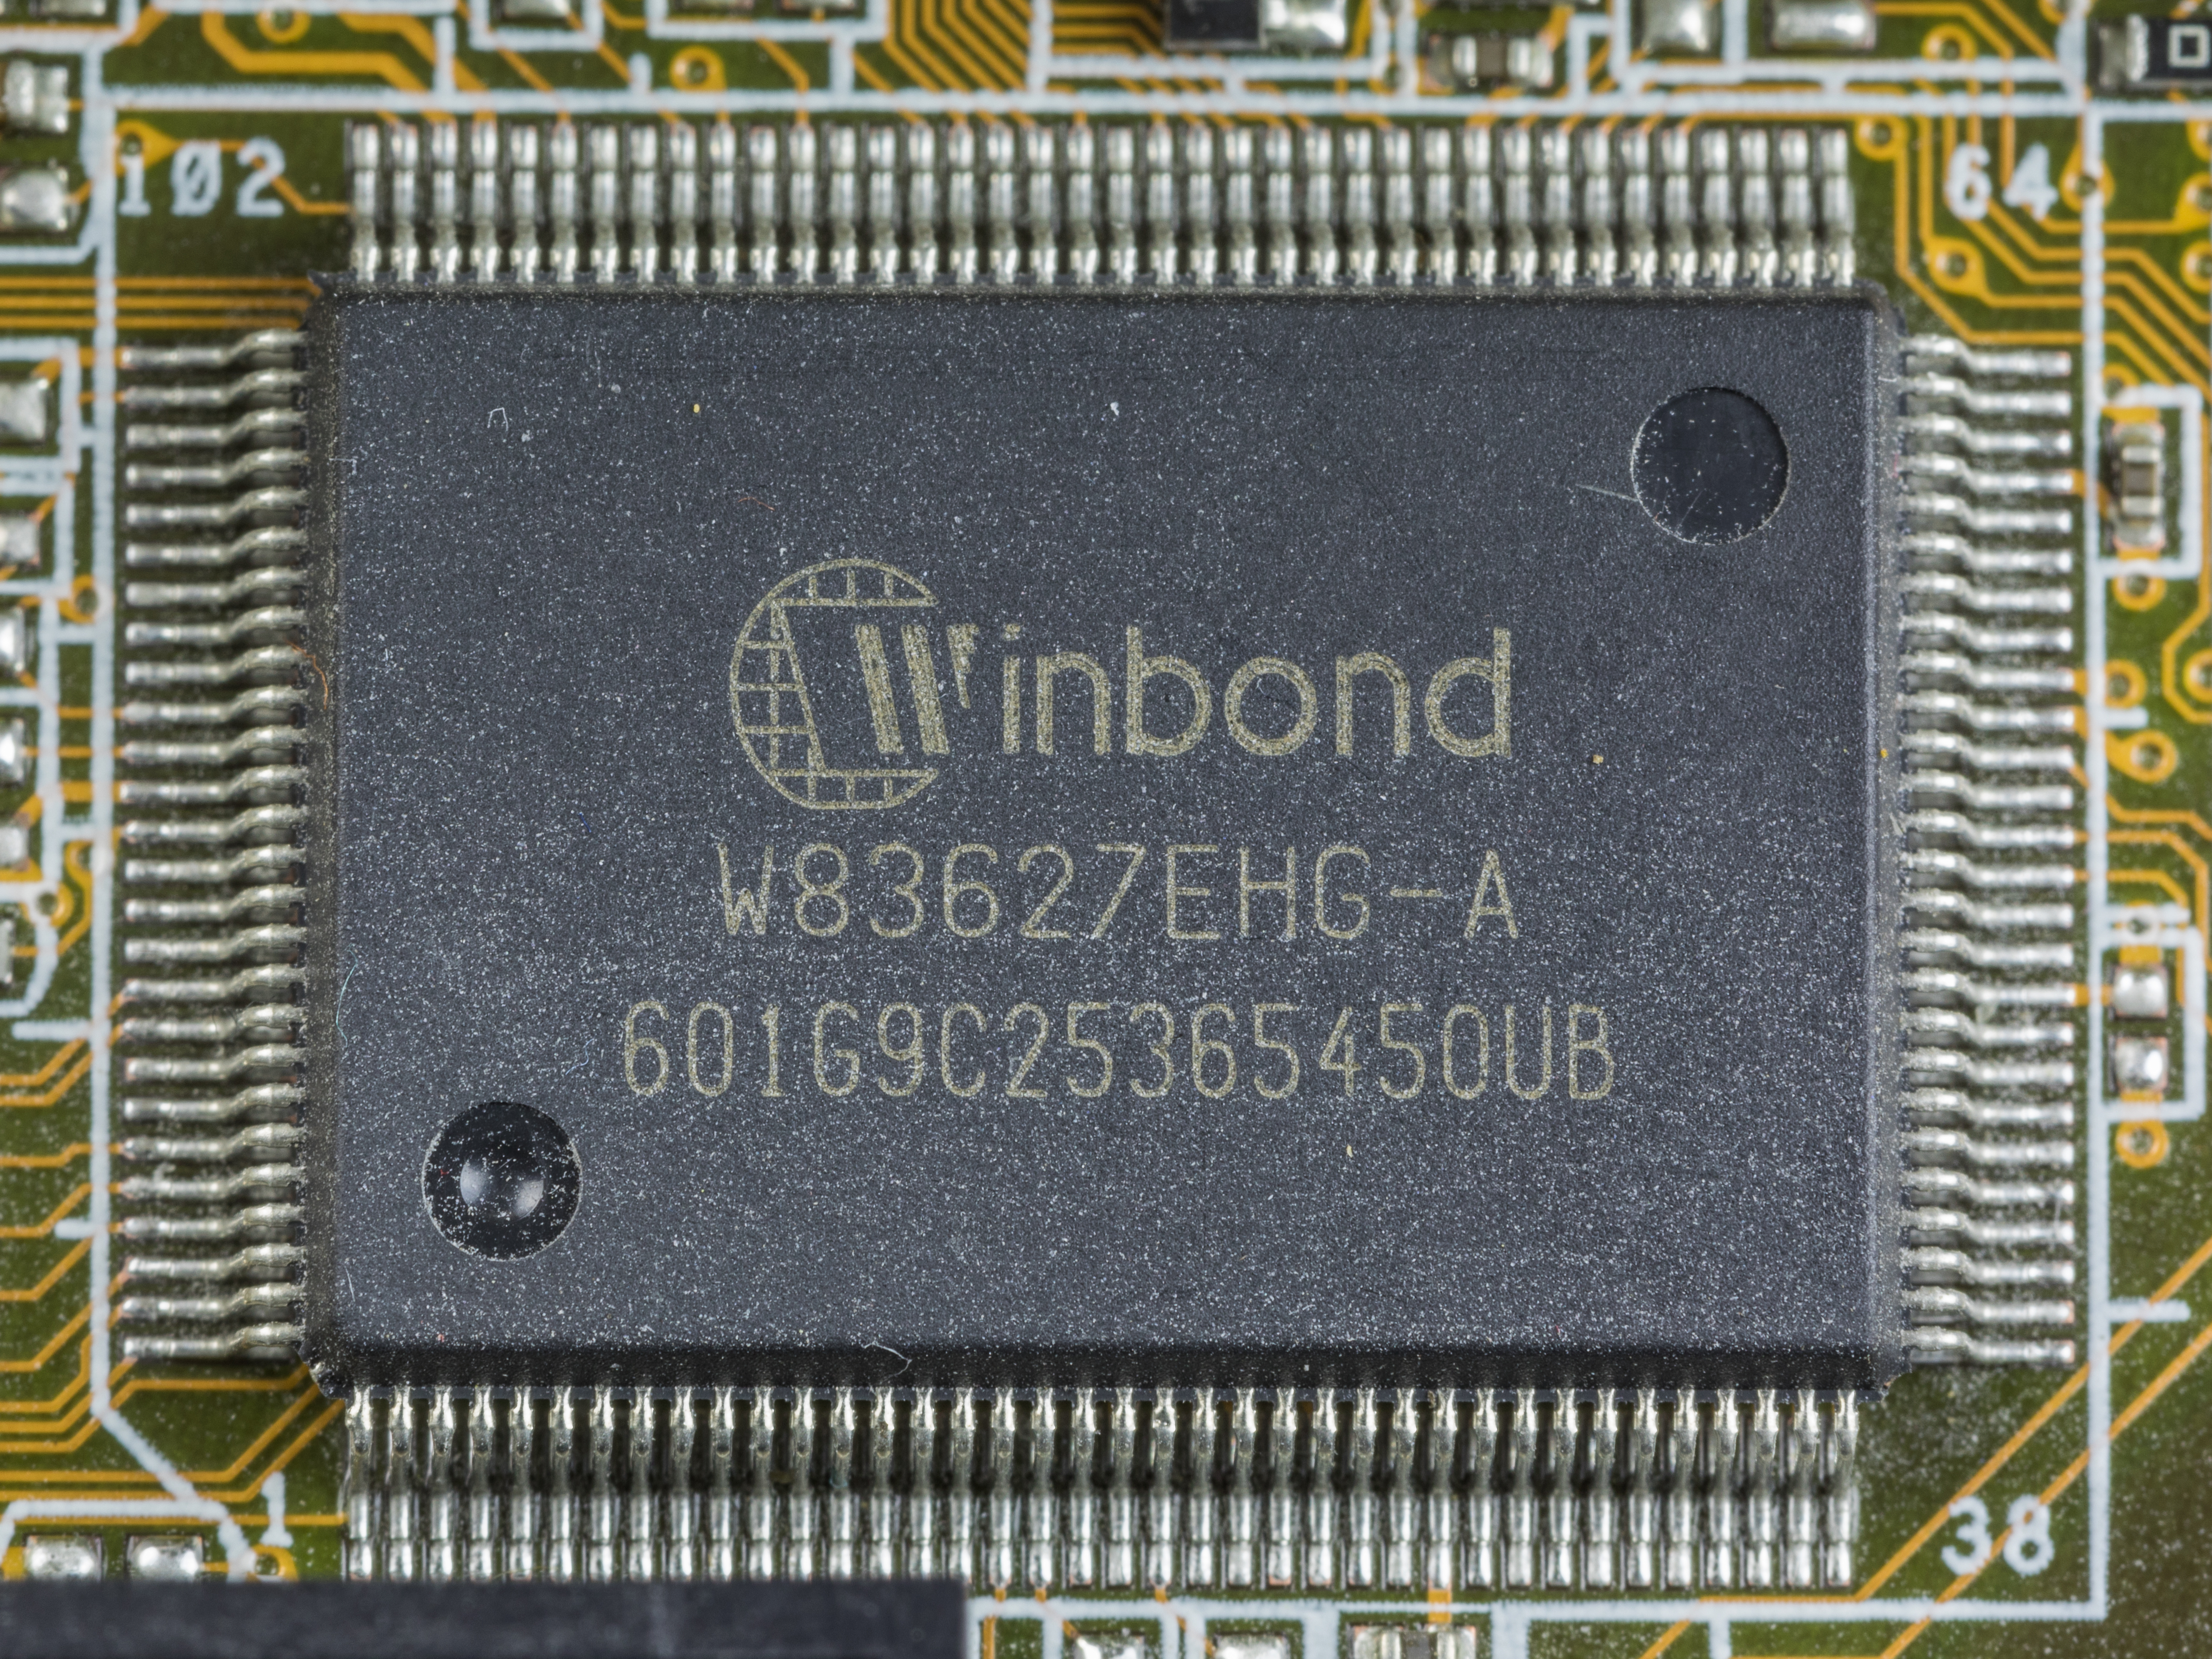 AGP PCI IMB USB I2C WINDOWS VISTA DRIVER